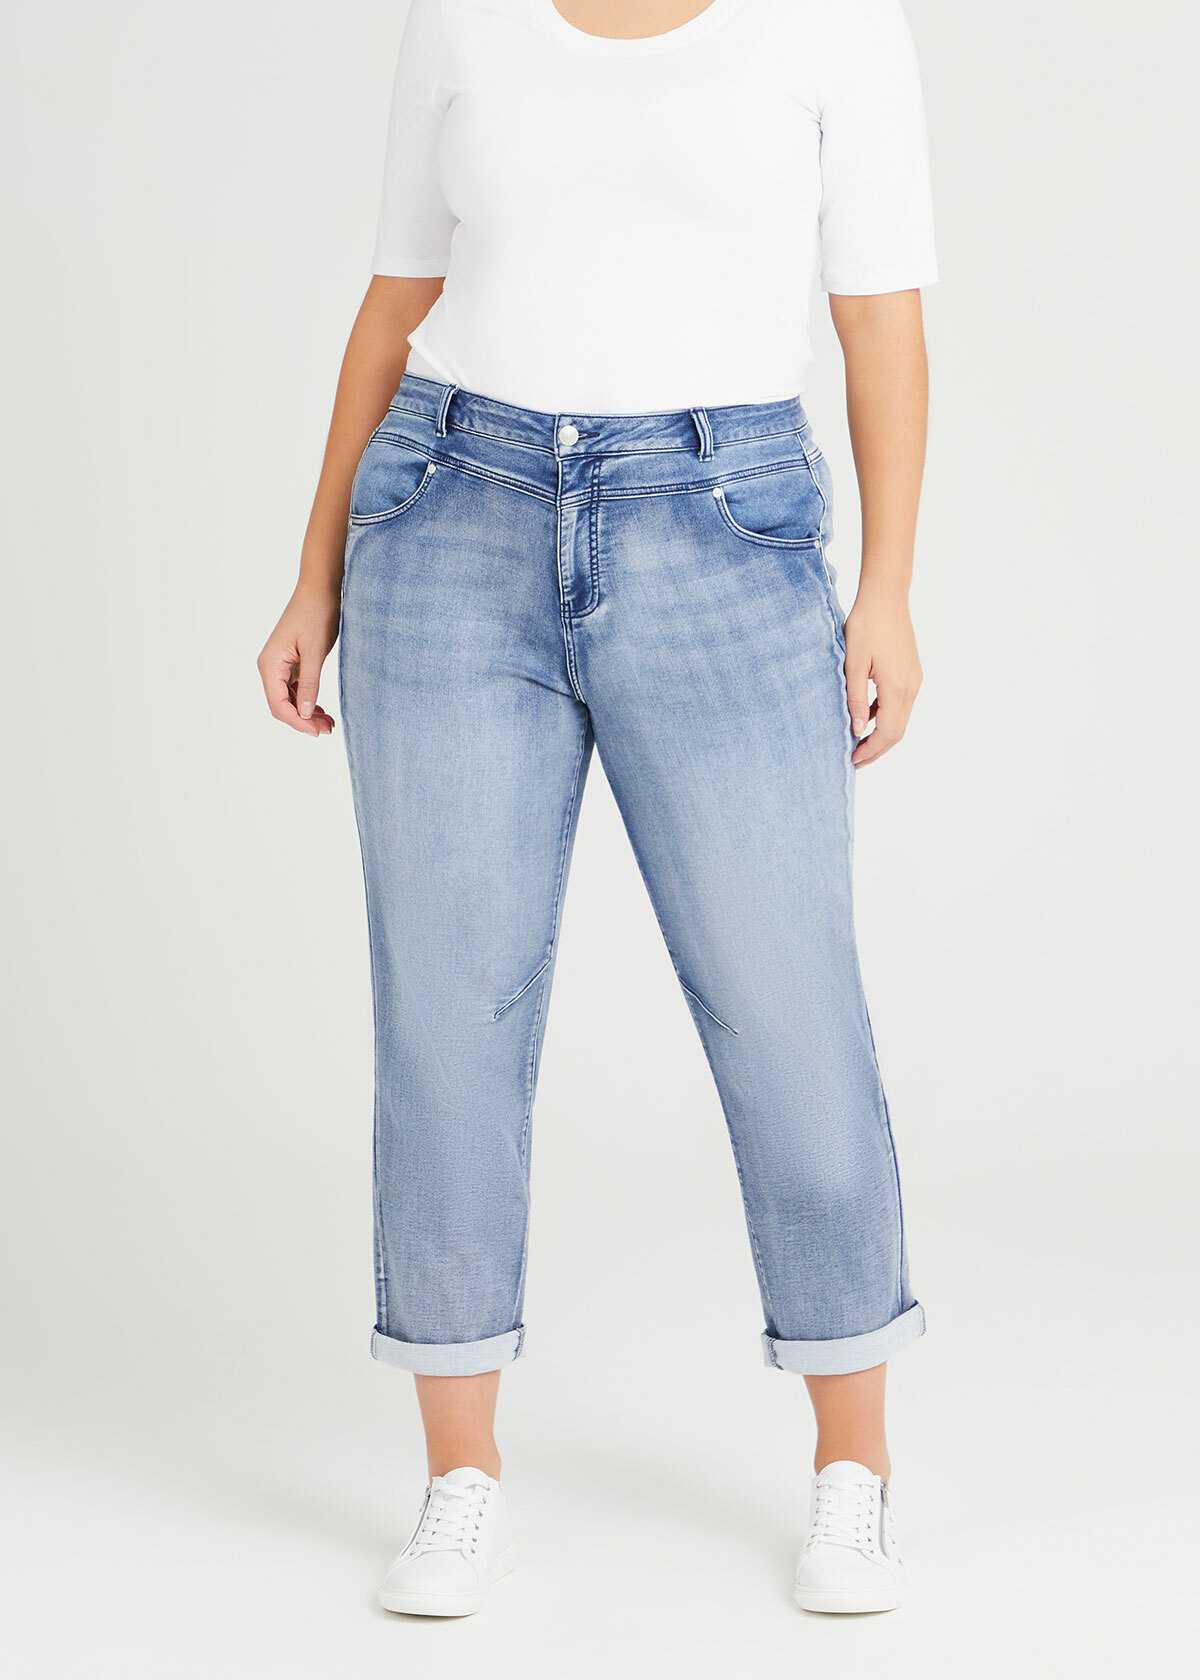 Shop Plus Size The Easy Fit Denim Jean in Blue | Taking Shape AU